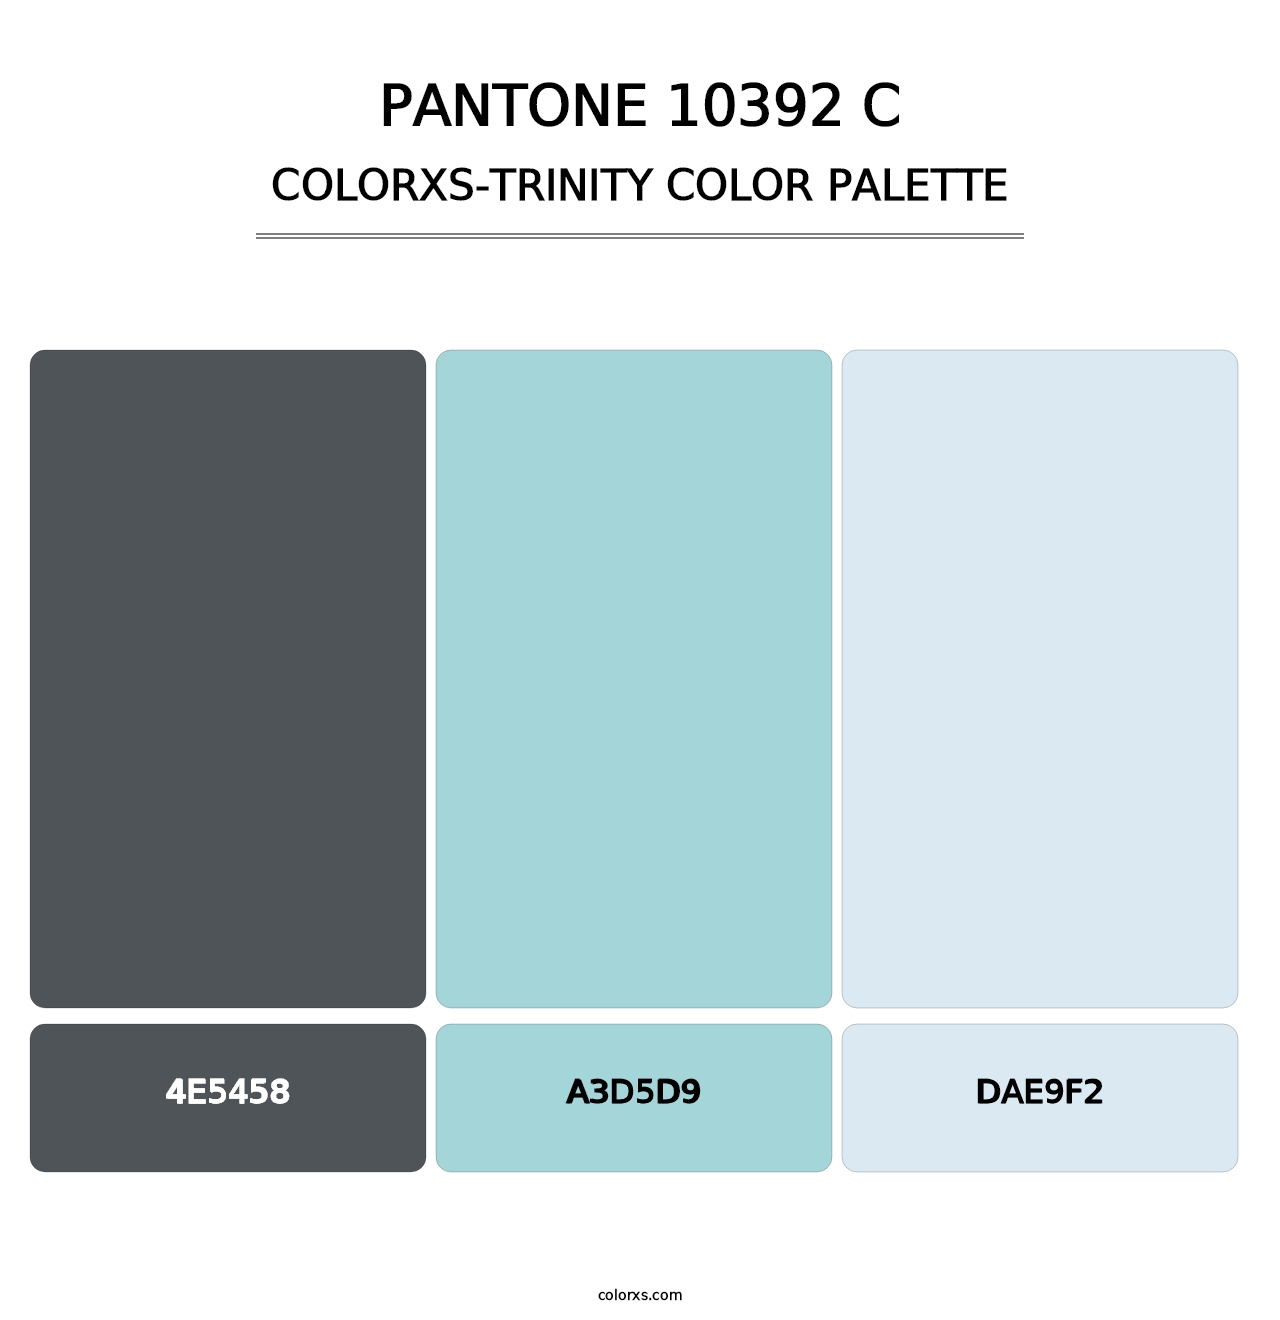 PANTONE 10392 C - Colorxs Trinity Palette